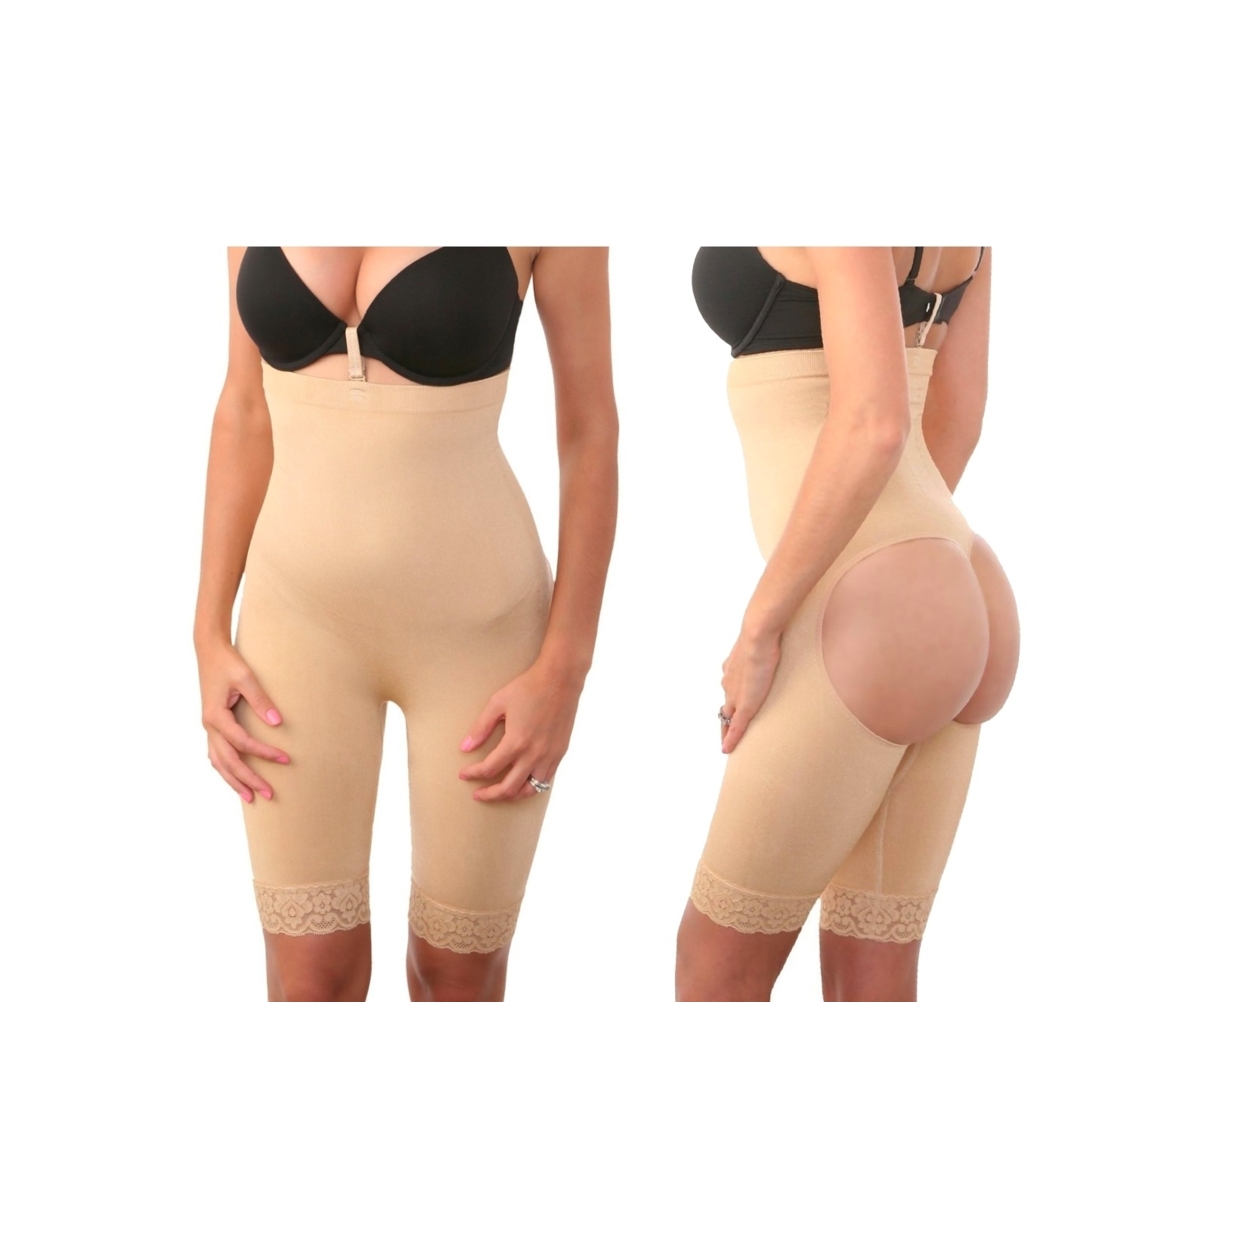 Women's Butt Uplifting Control Shaper - Beige, S/M